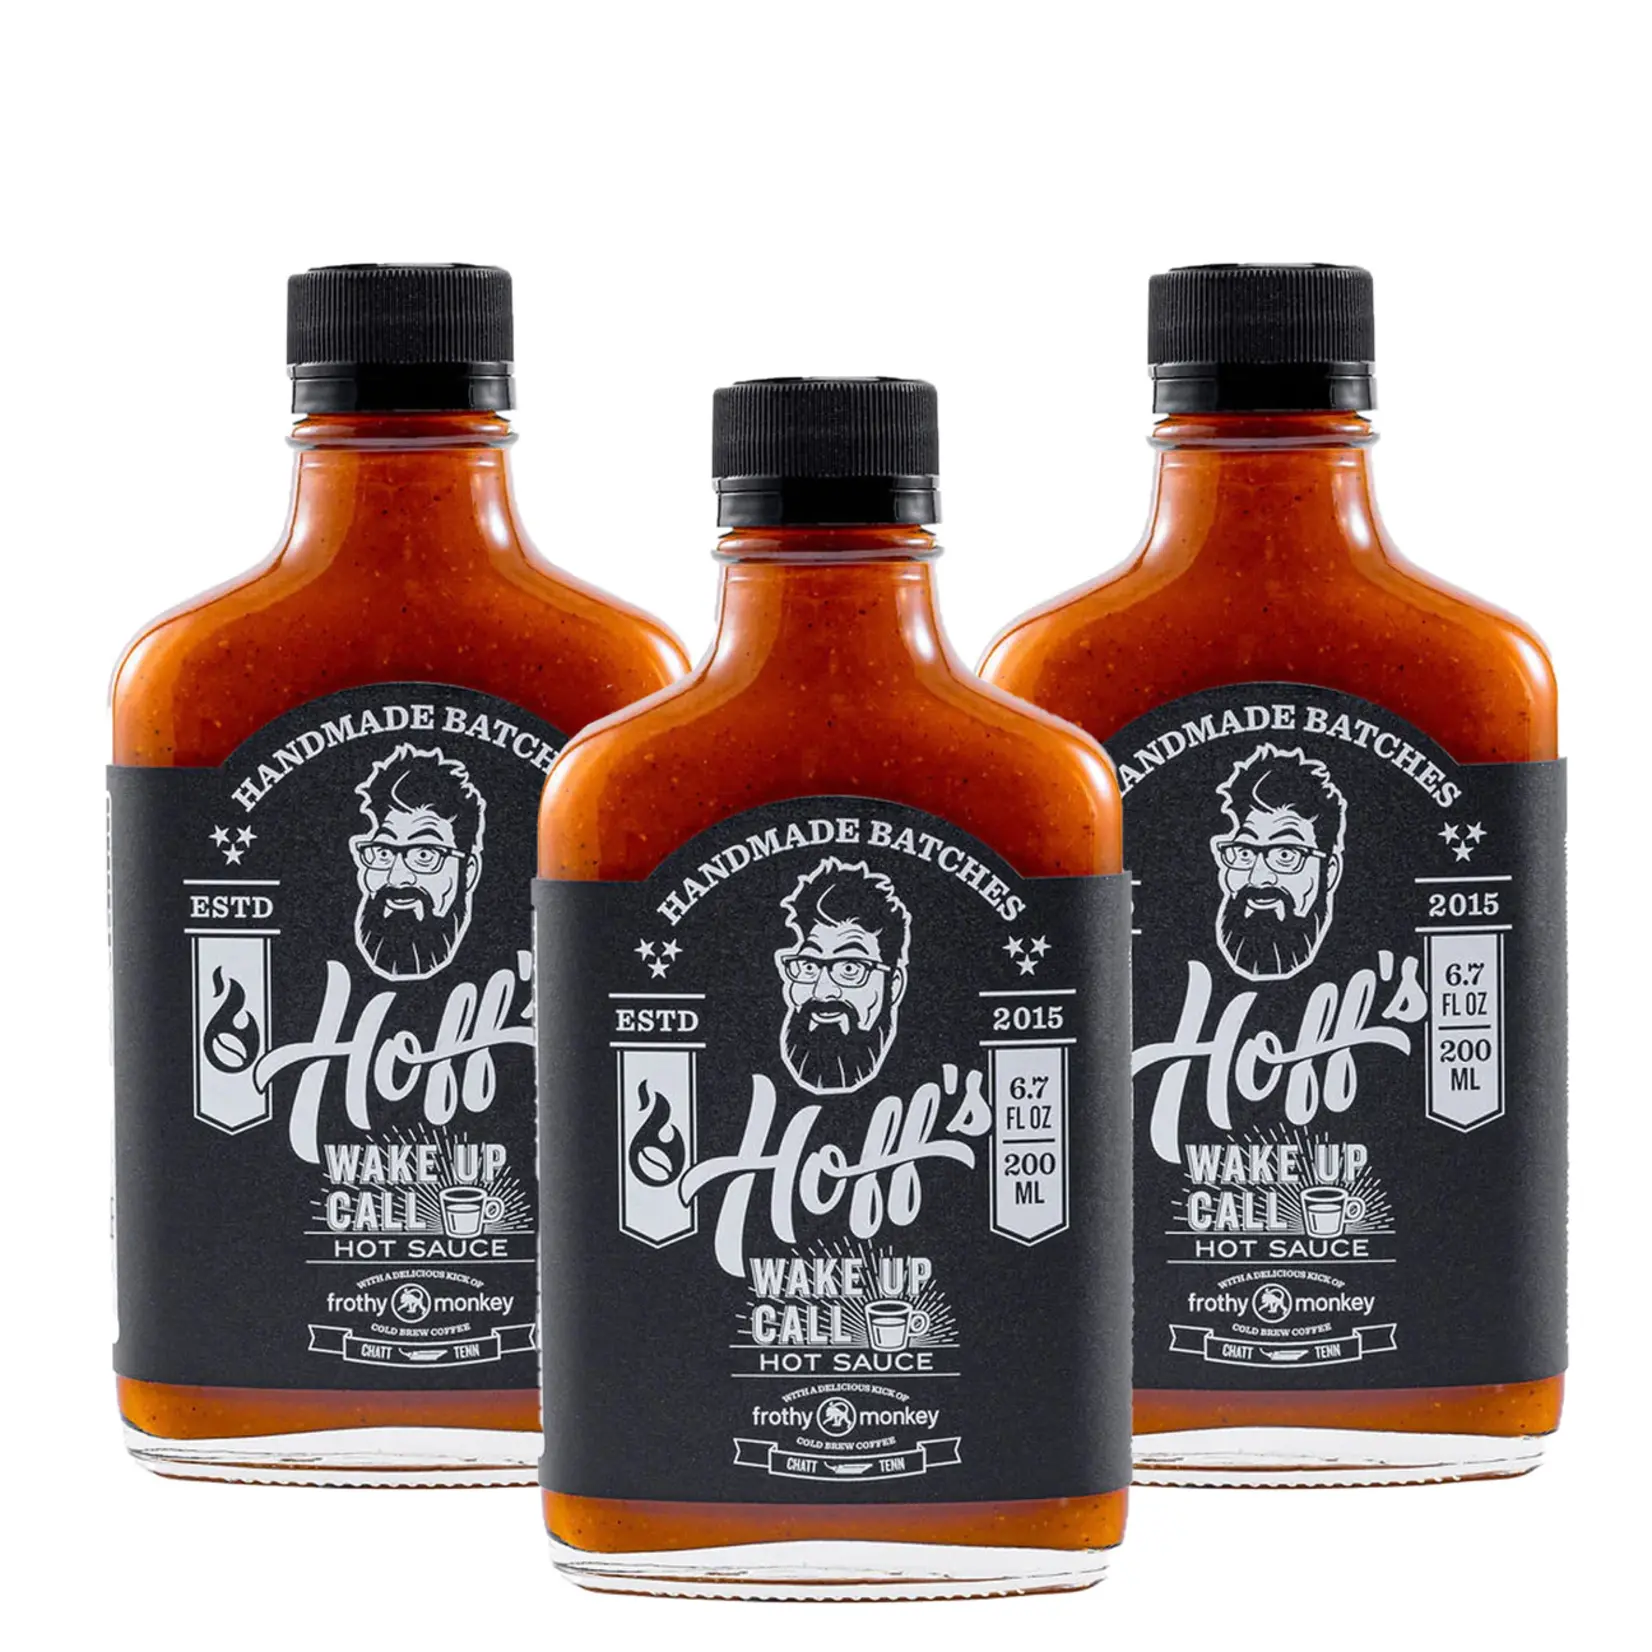 Hoff's Sauce Wake Up Call Hot Sauce